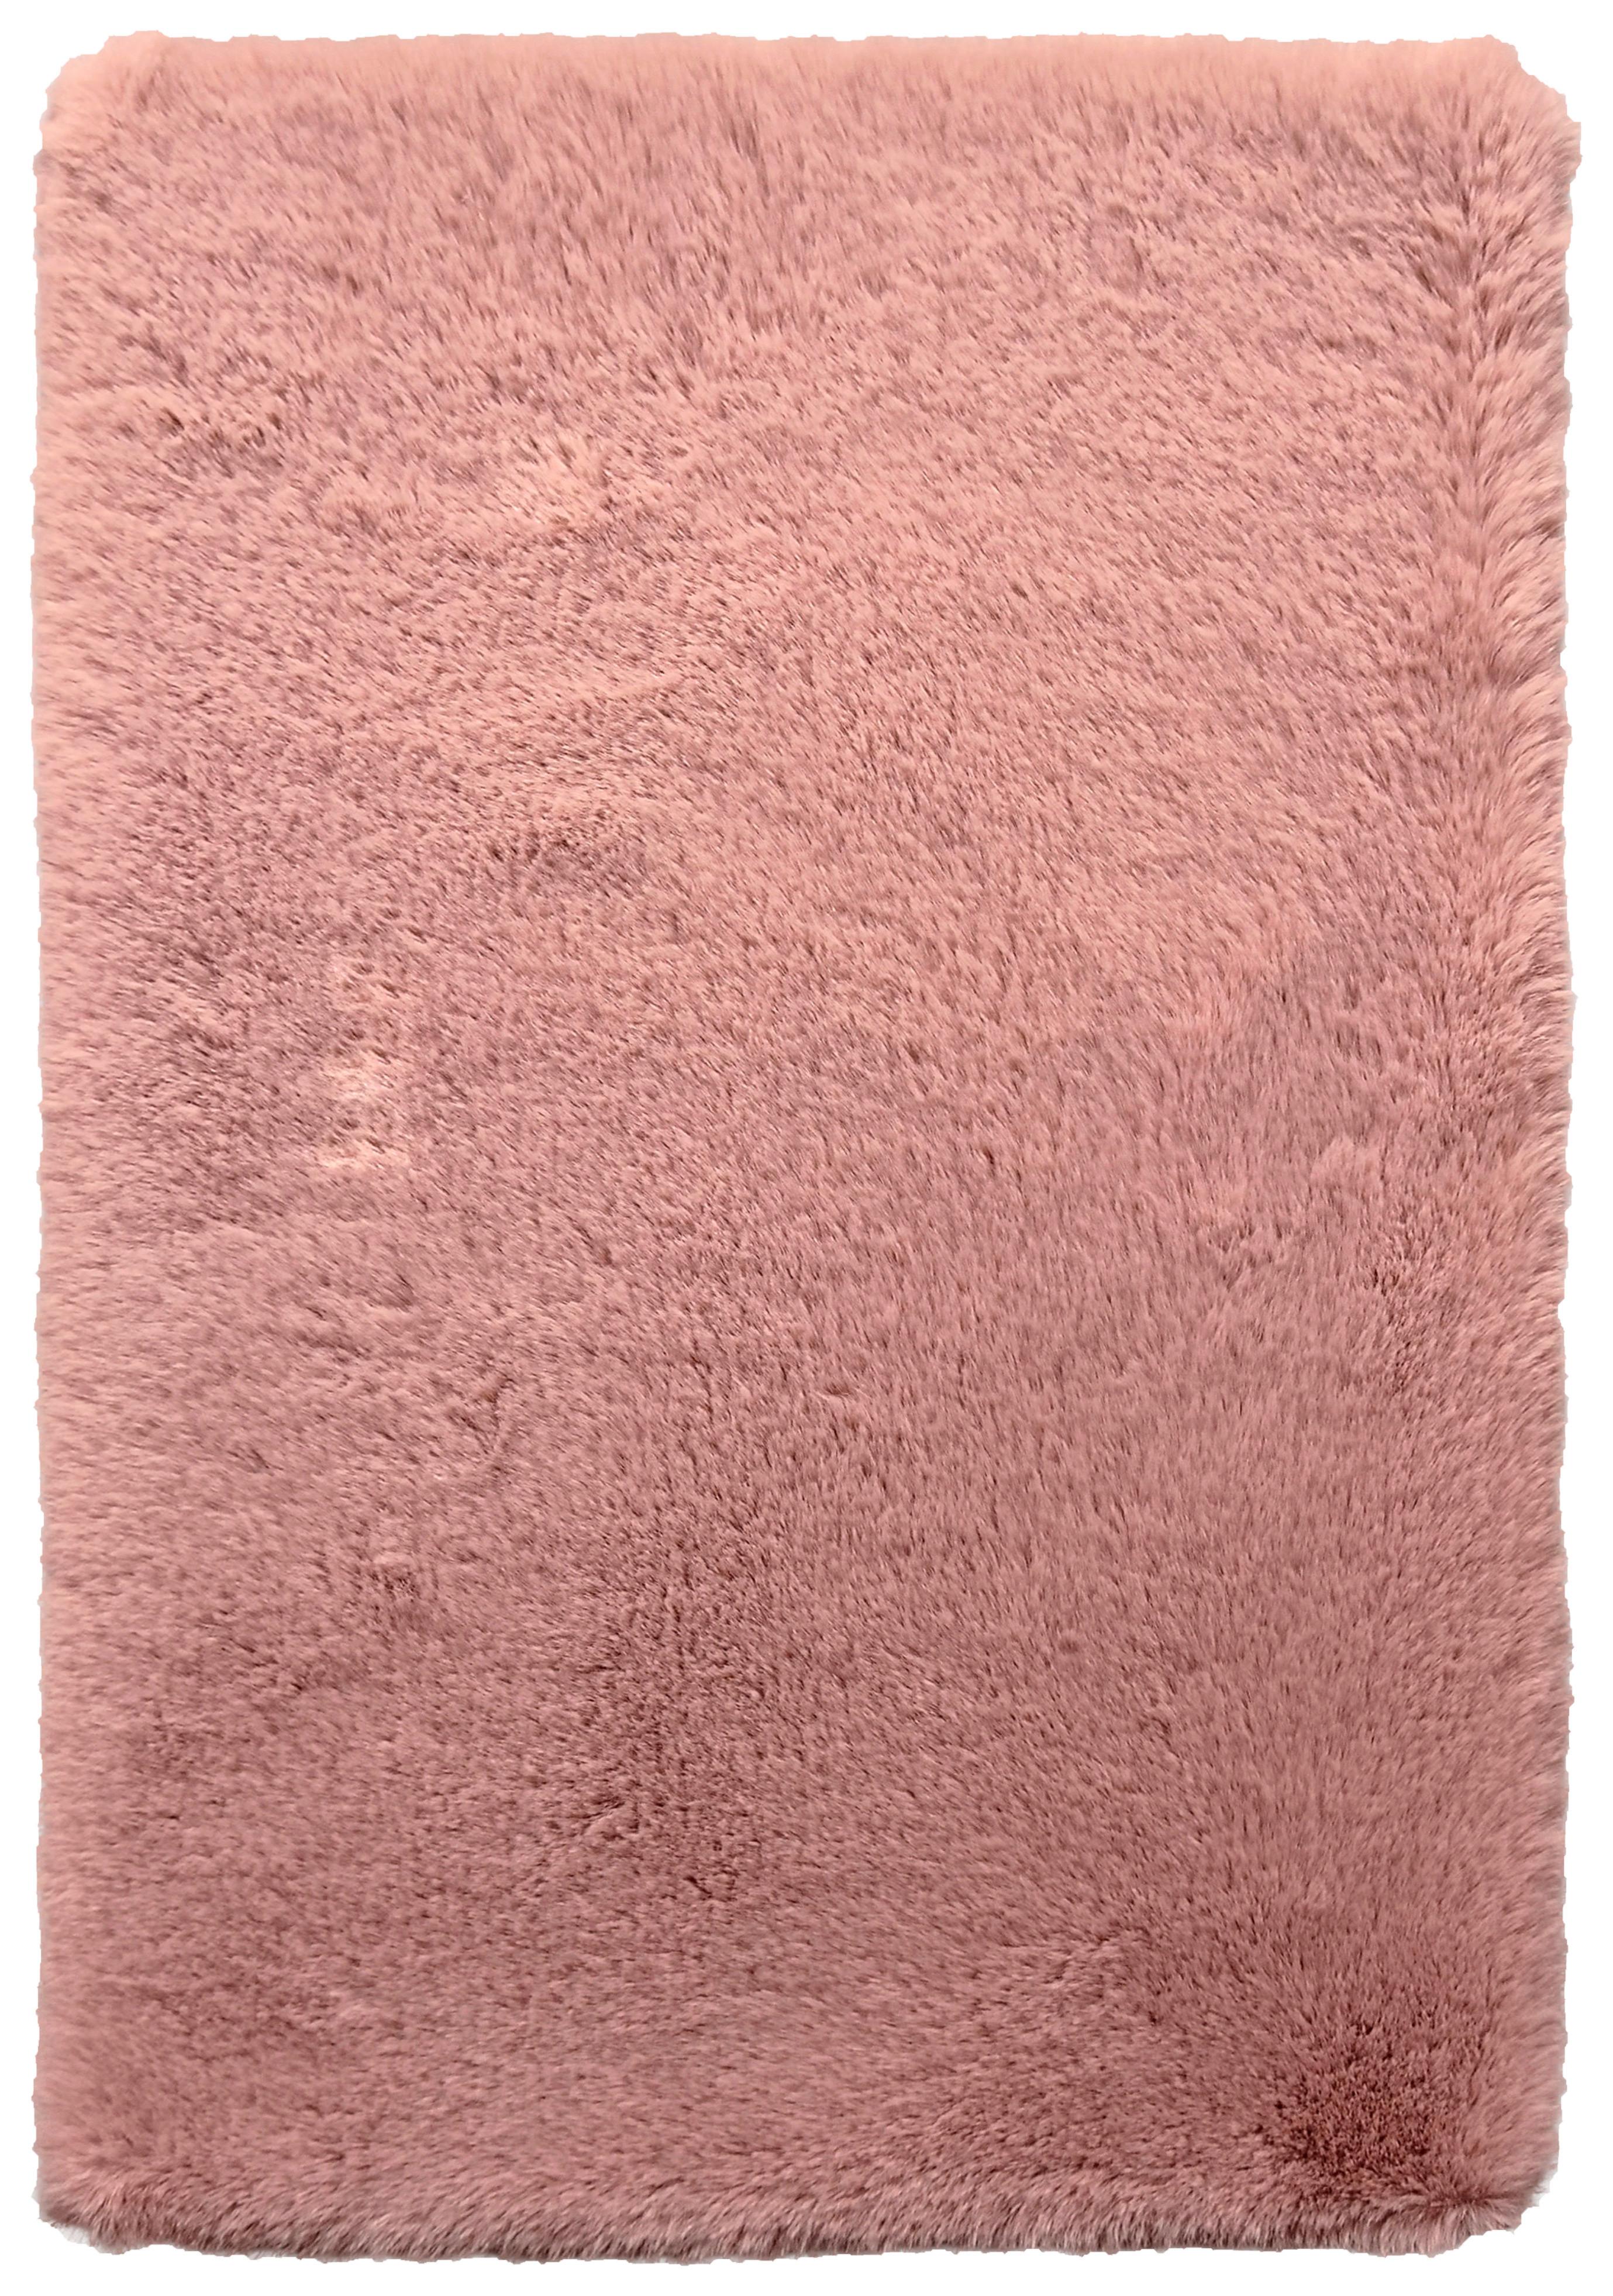 Umělá Kožešina Caroline 3, 160/220cm, Růžová - starorůžová, textil (160/220cm) - Modern Living